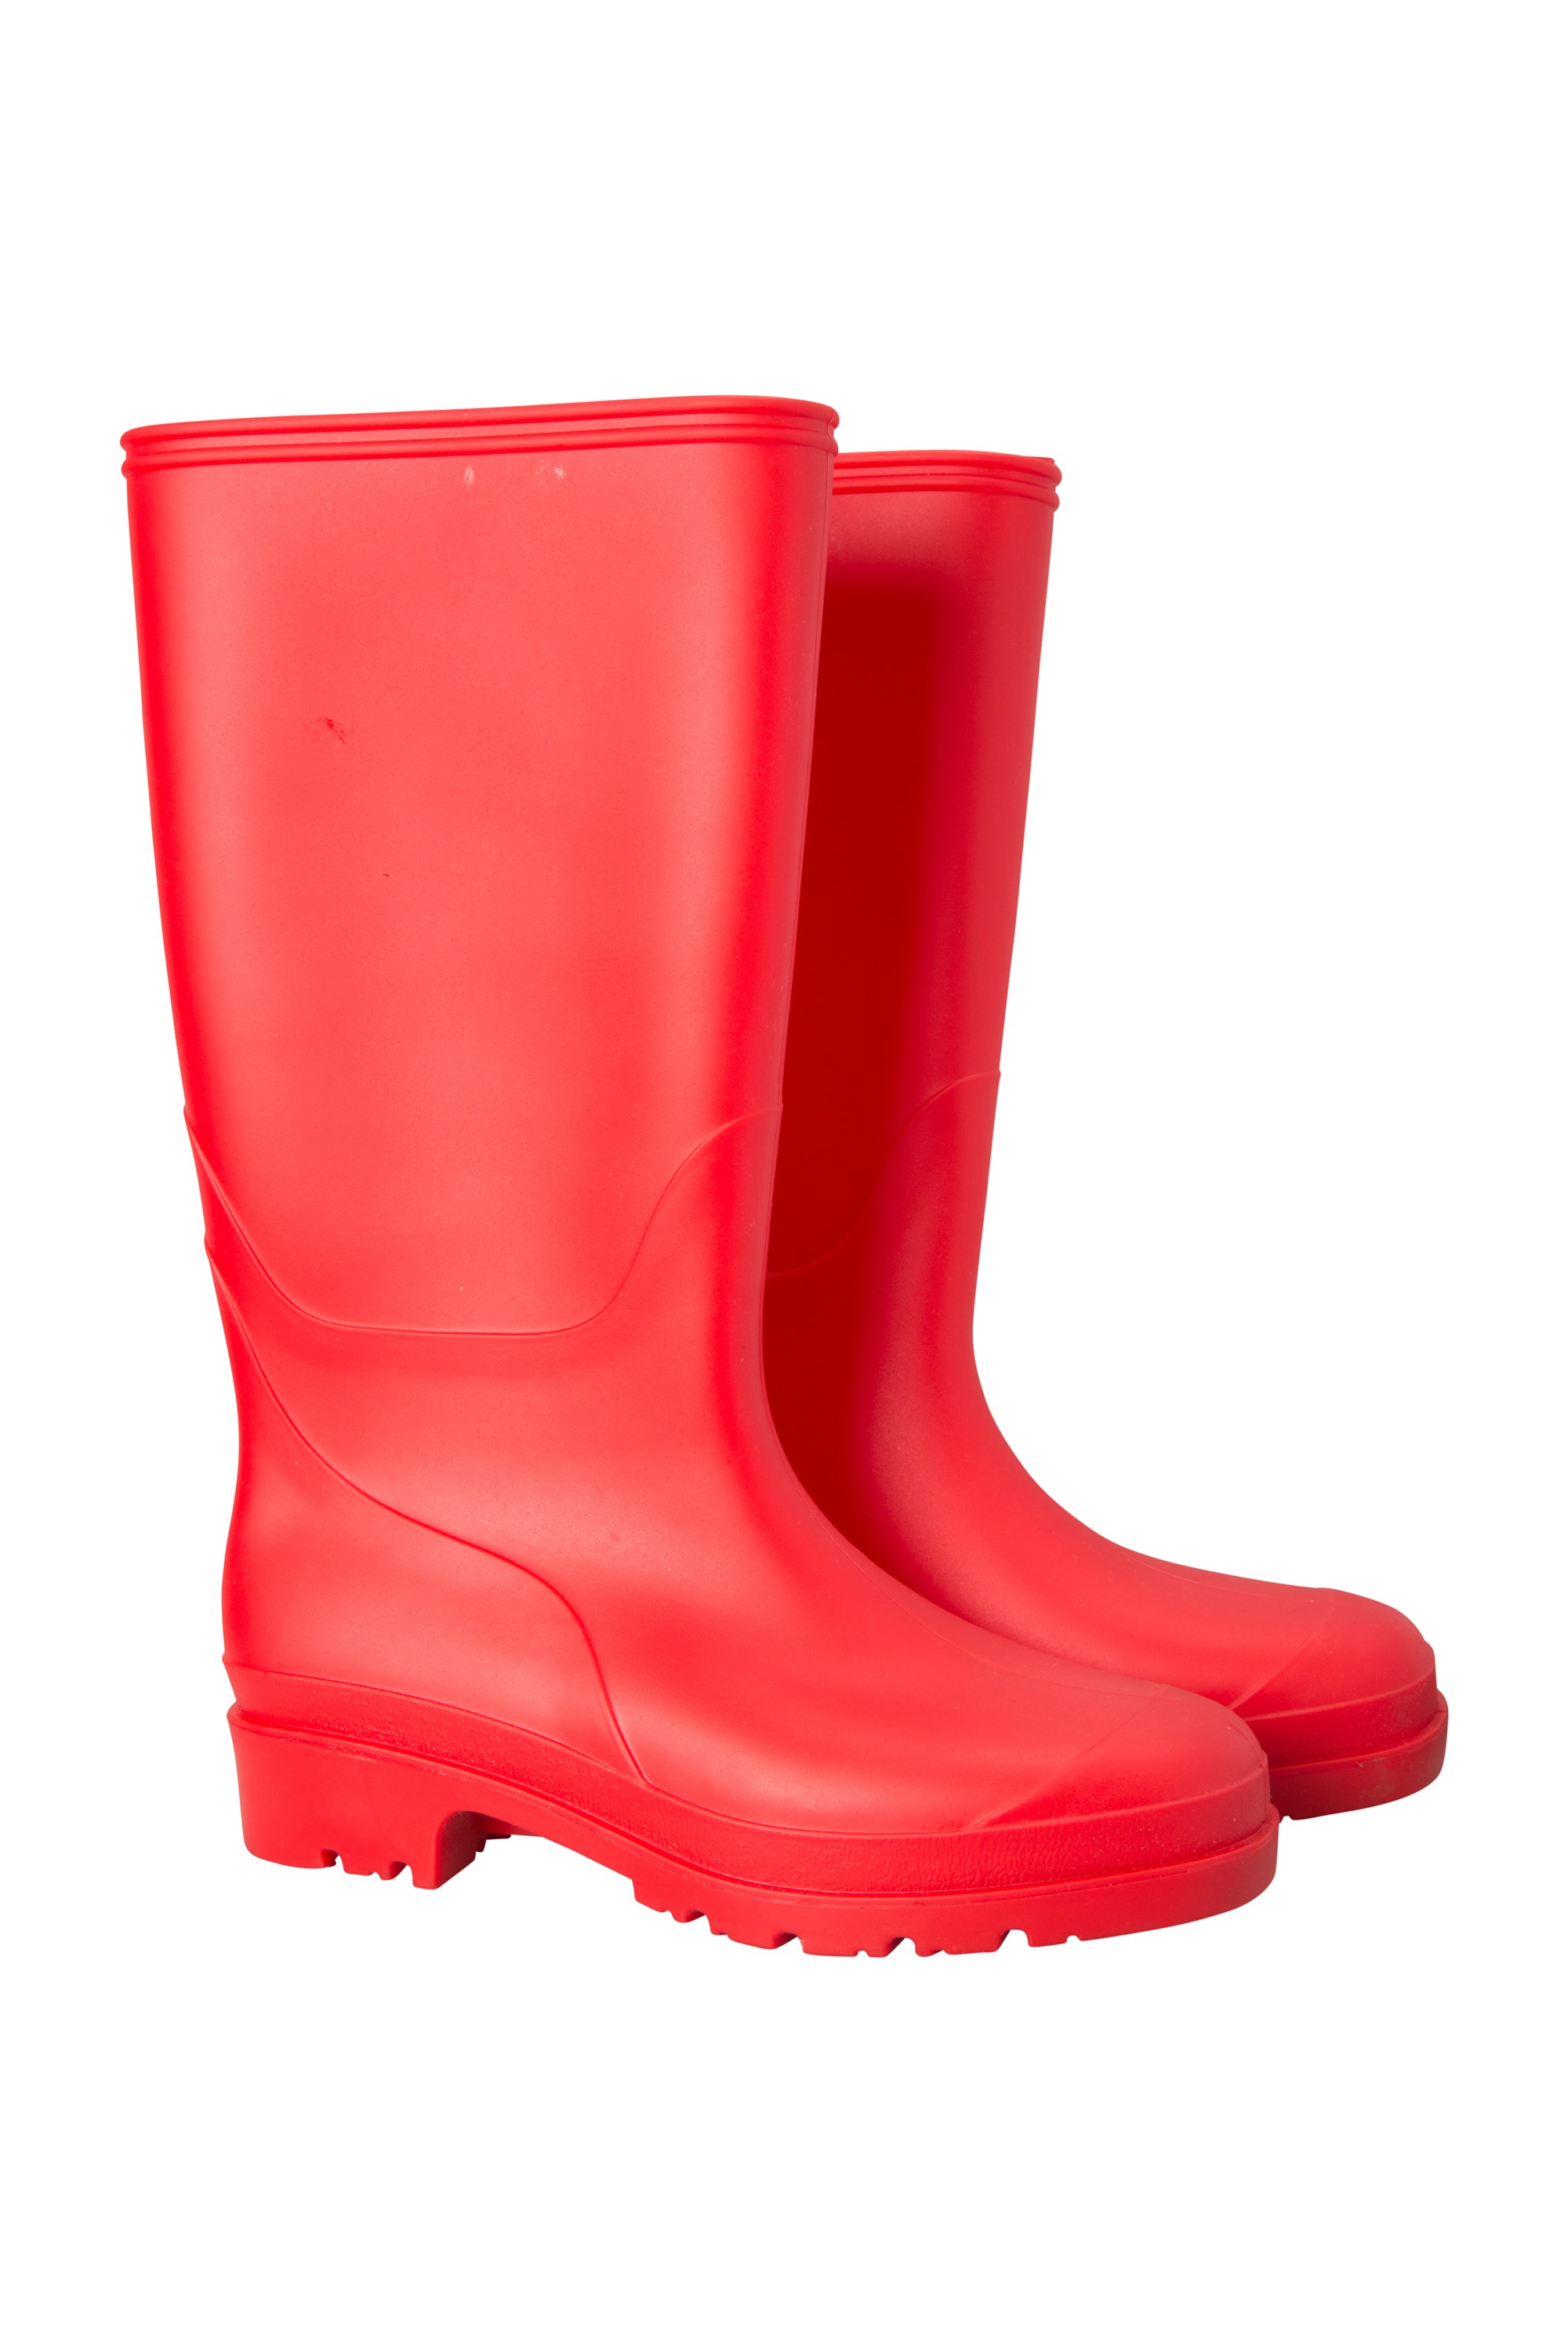 Mountain Warehouse Muddle Kids Rain Boots Red